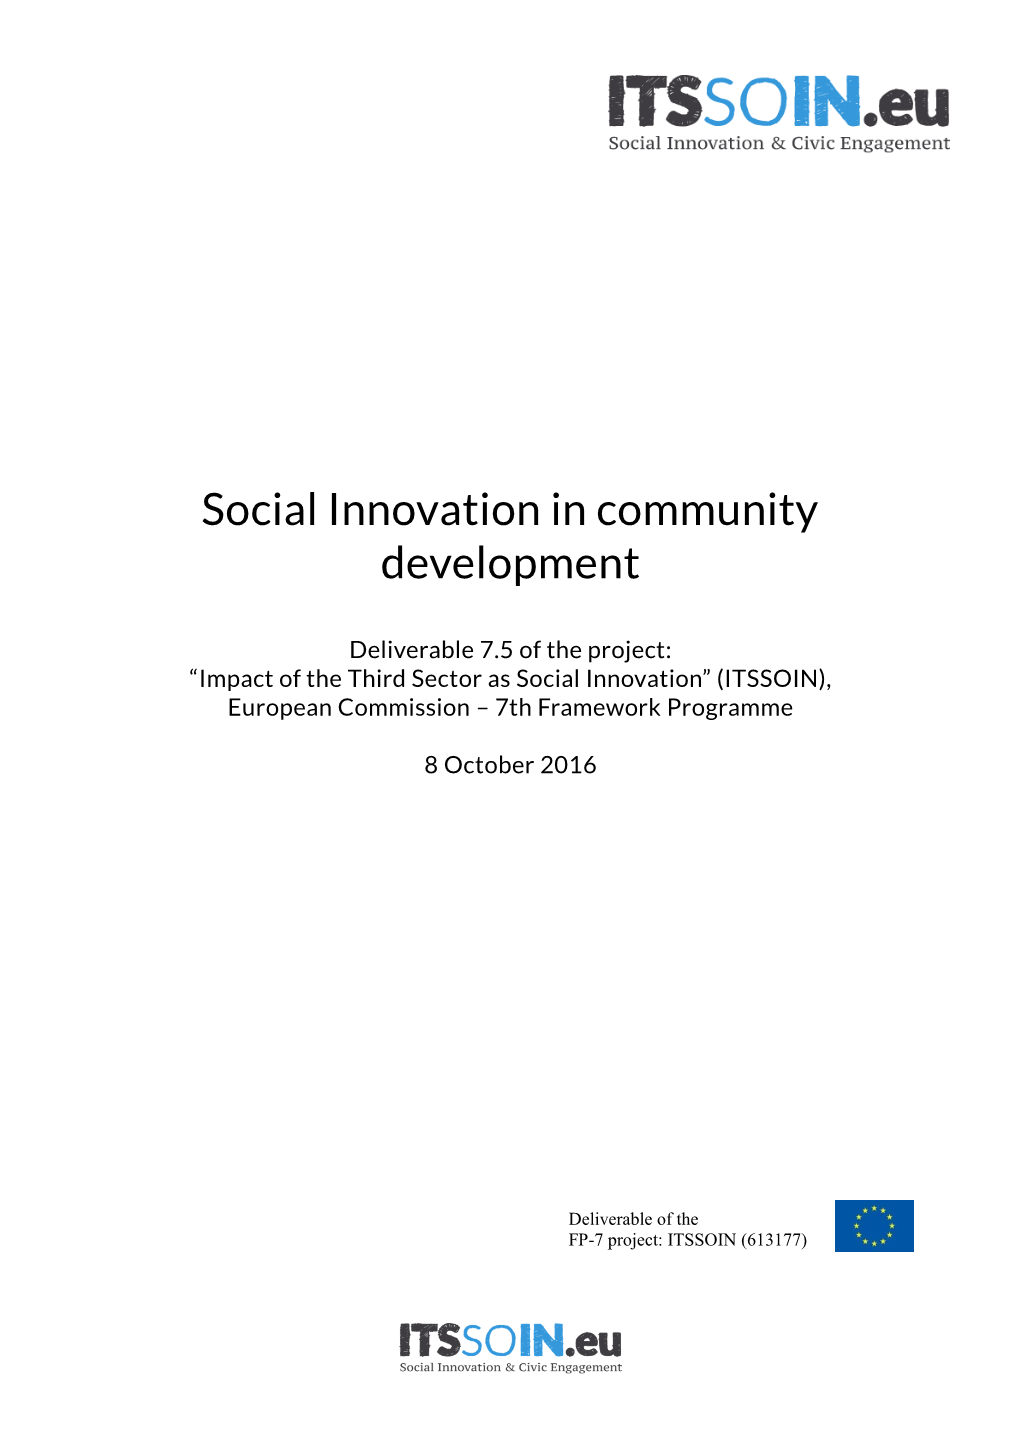 Social Innovation in Community Development